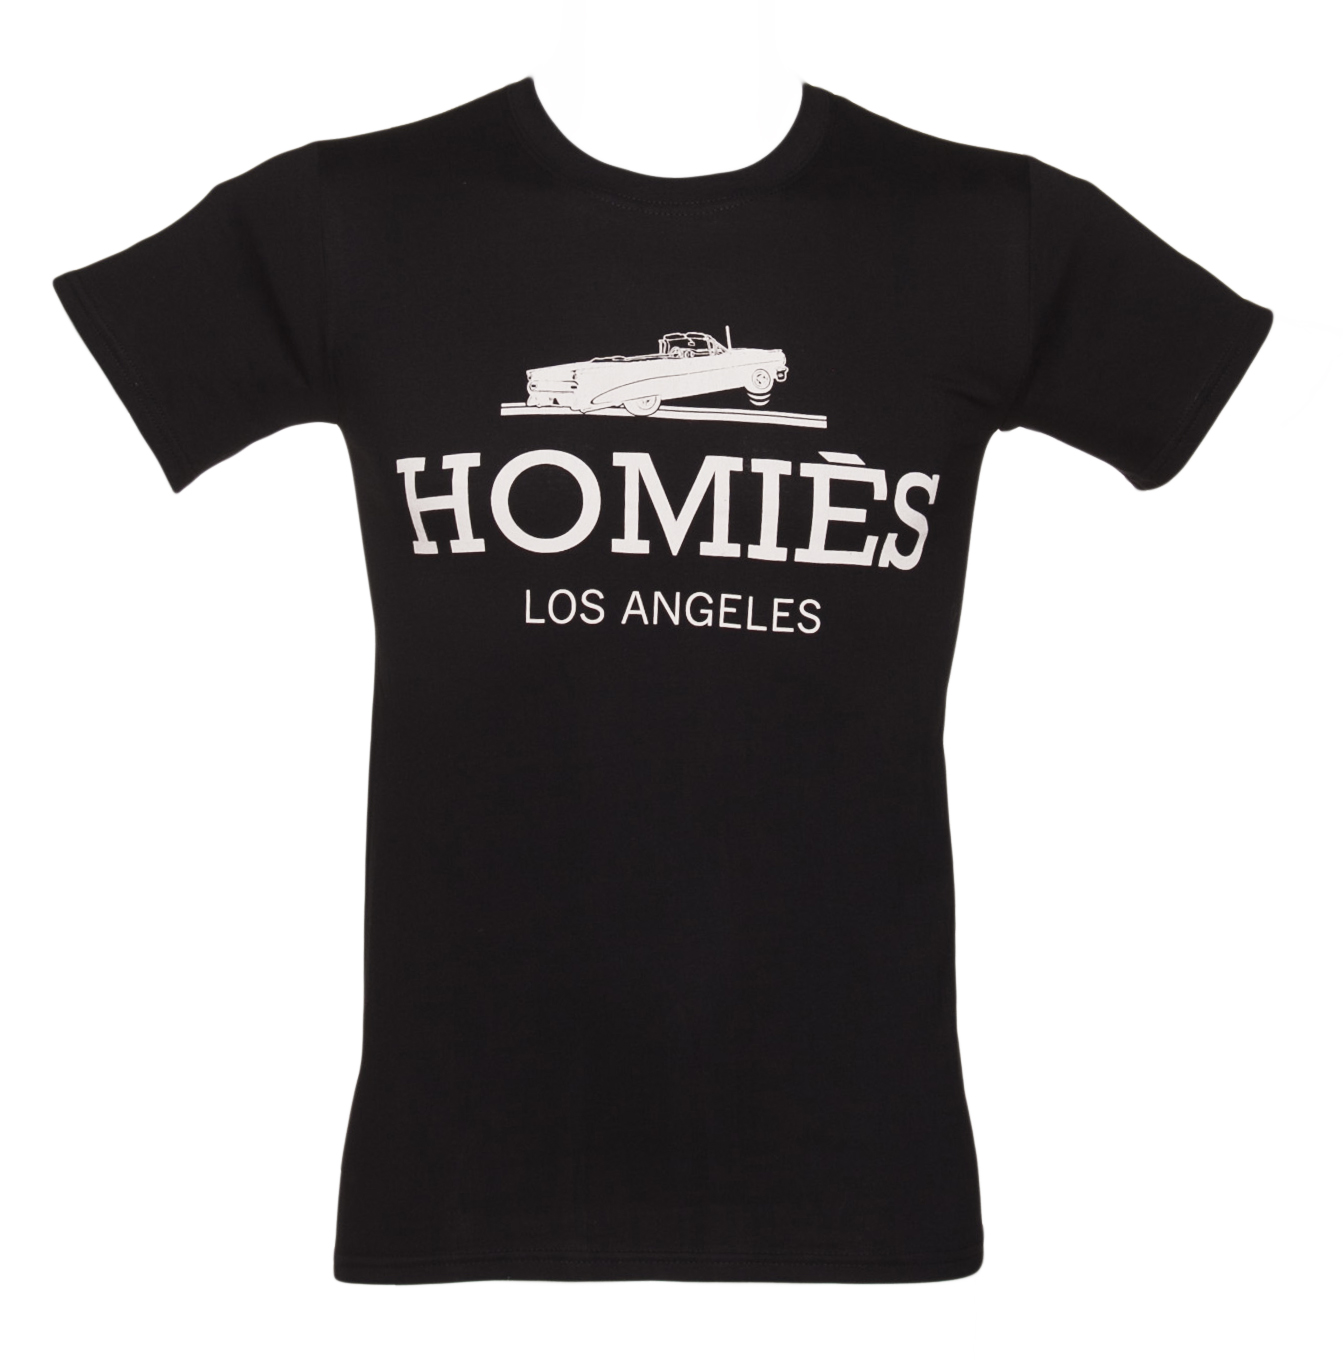 Mens Black Homies Parody T-Shirt from Brand